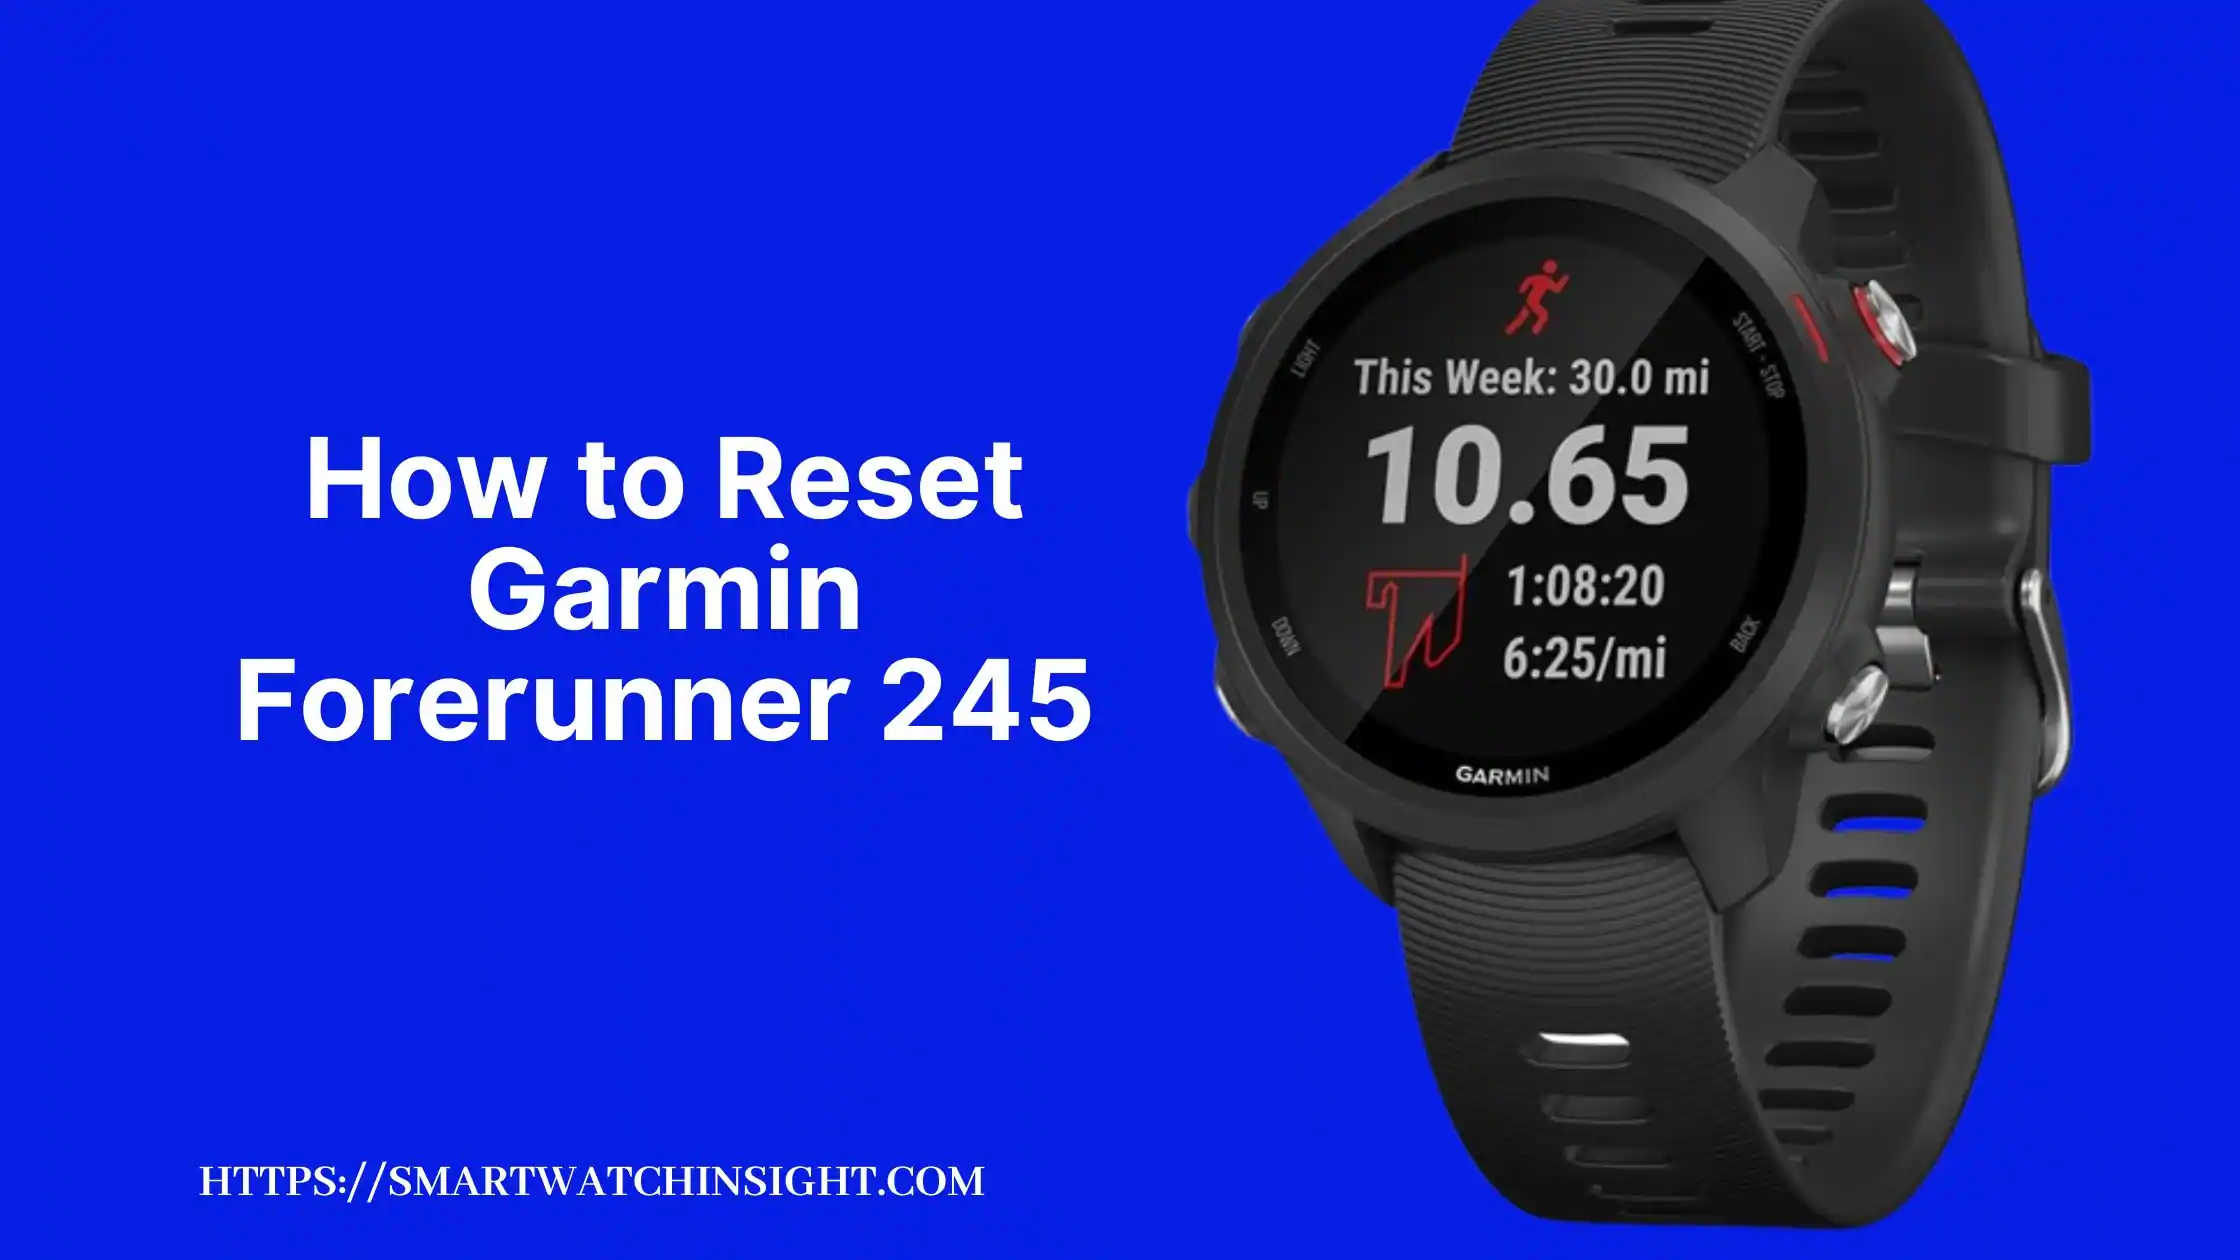 How to Reset Garmin Forerunner 245